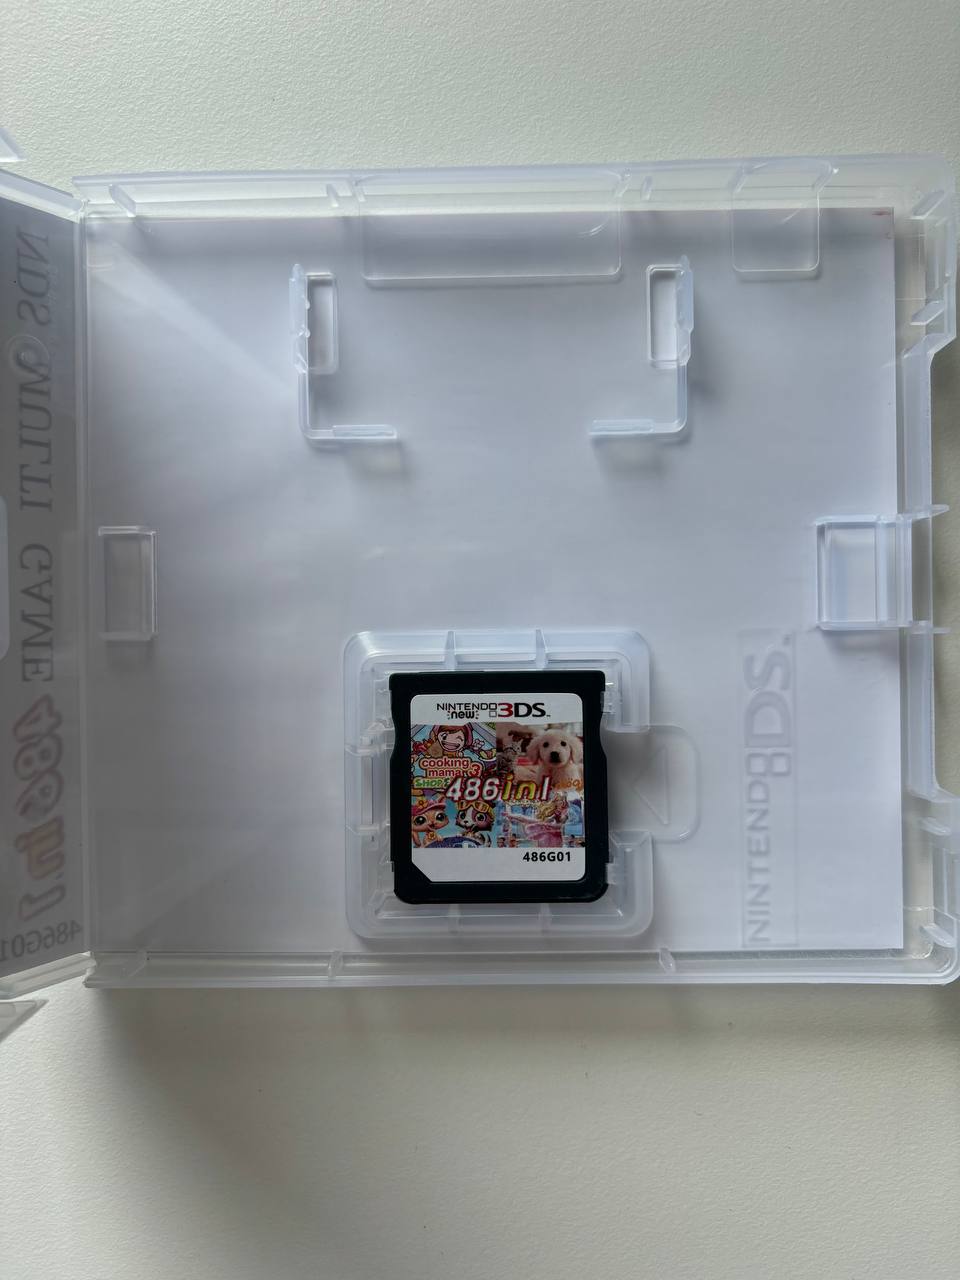 Multi Game 486 in 1 Nintendo DS 3DS